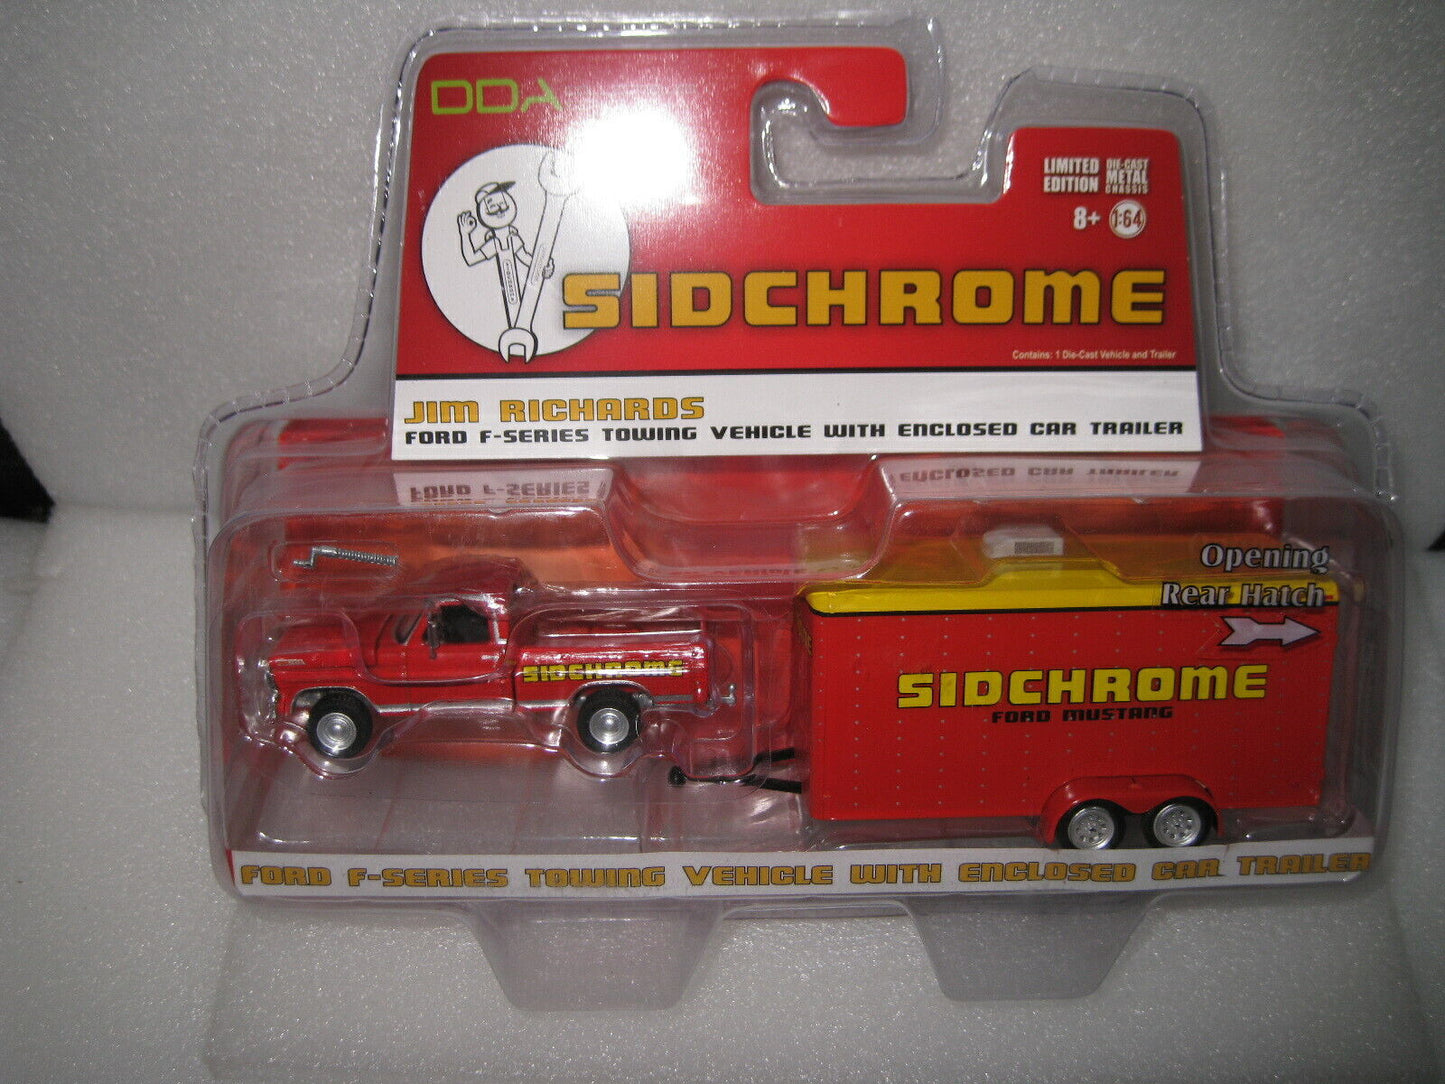 DDA 1/64 Jim Richards Ford F Series Truck & Enclosed Car Trailer Sidchrome